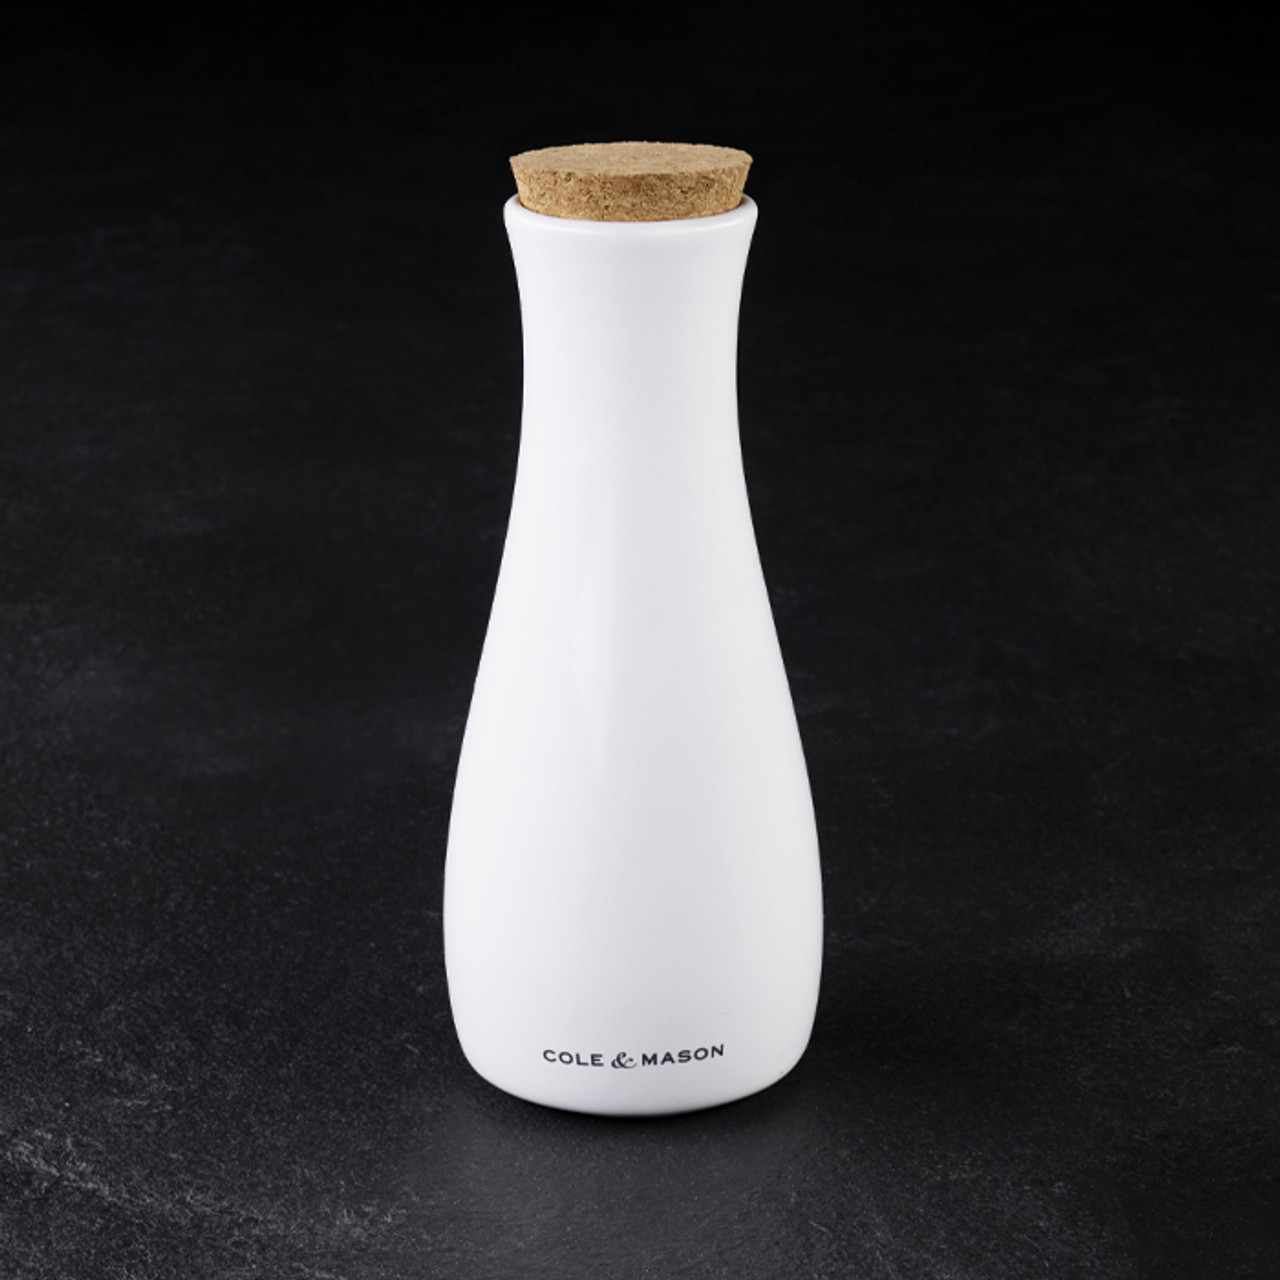 Ceramic Pourer, white, 250ml/8.45 fl.oz, with cork stopper